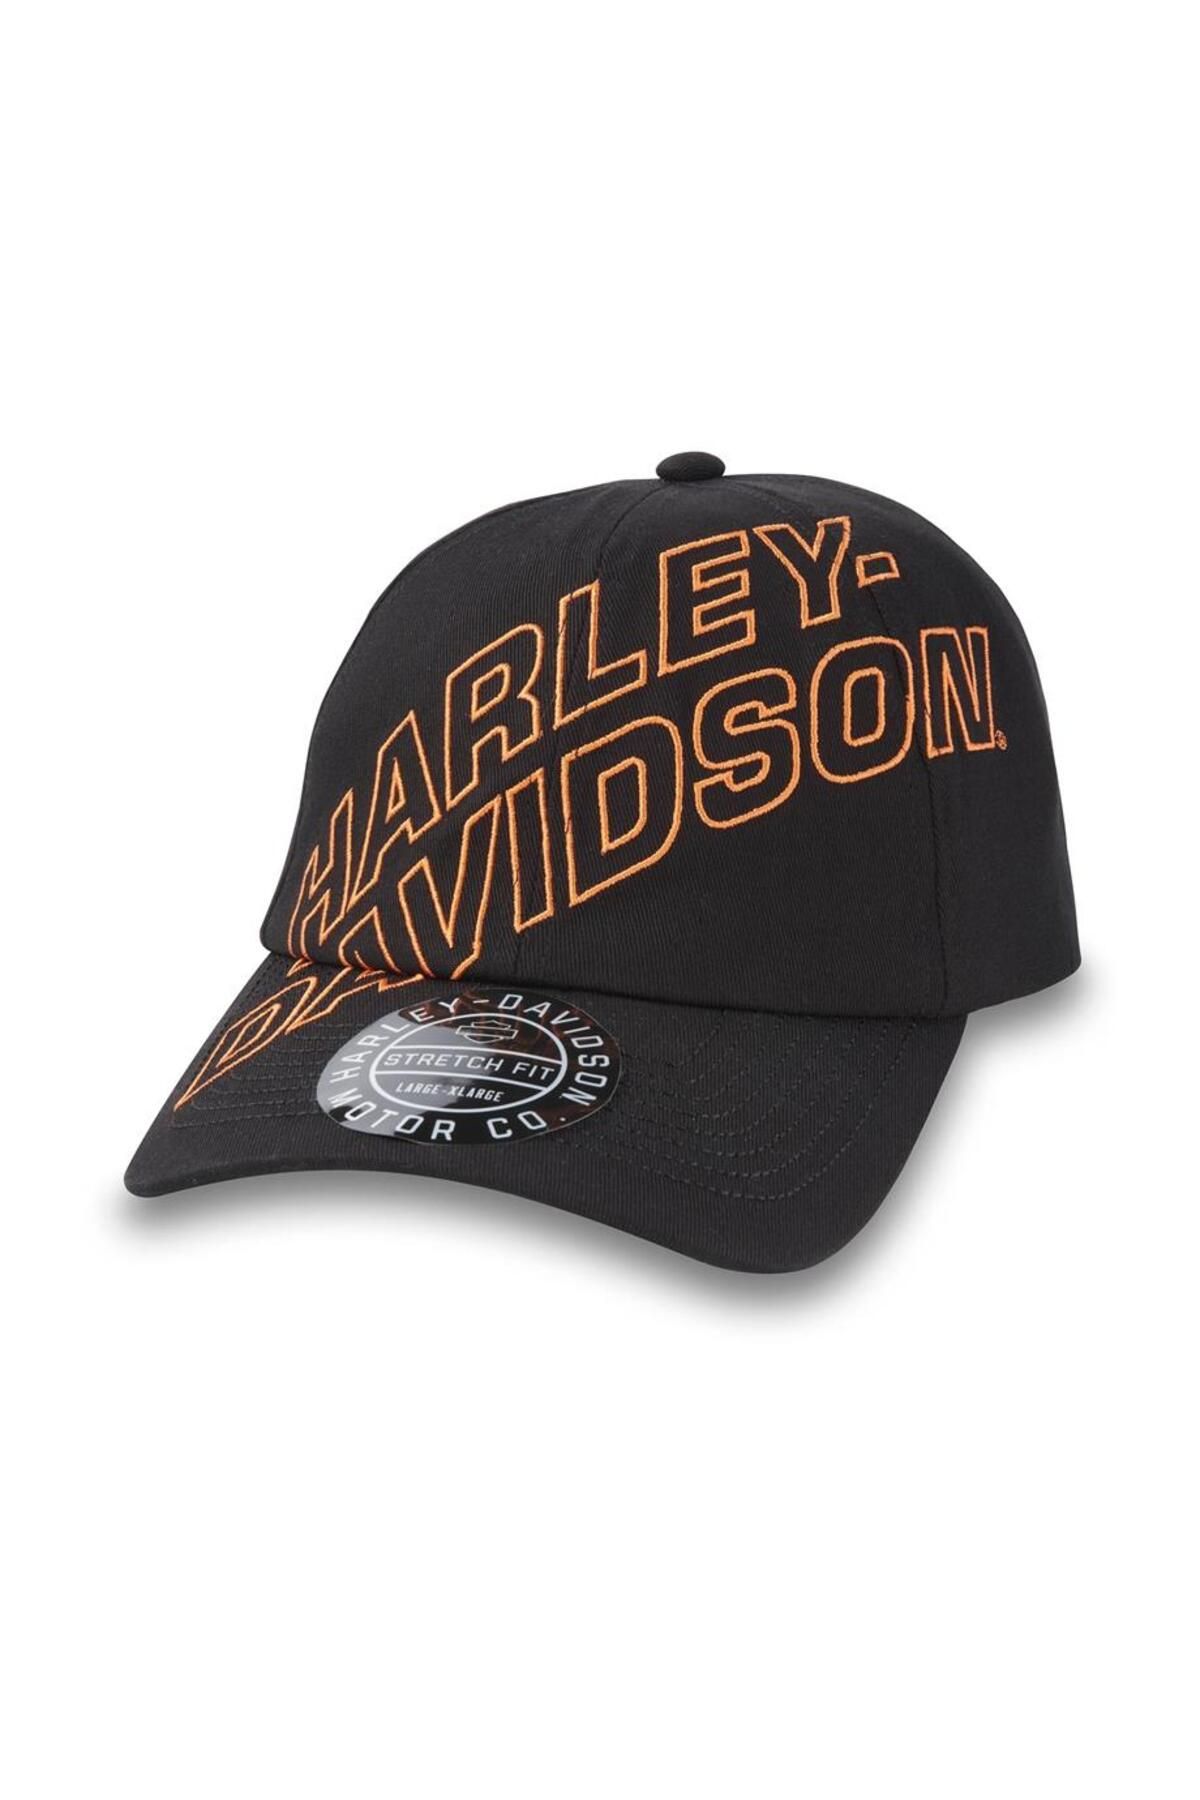 Harley Davidson Harley-Davidson Invincible Fitted Baseball Cap Erkek Şapka